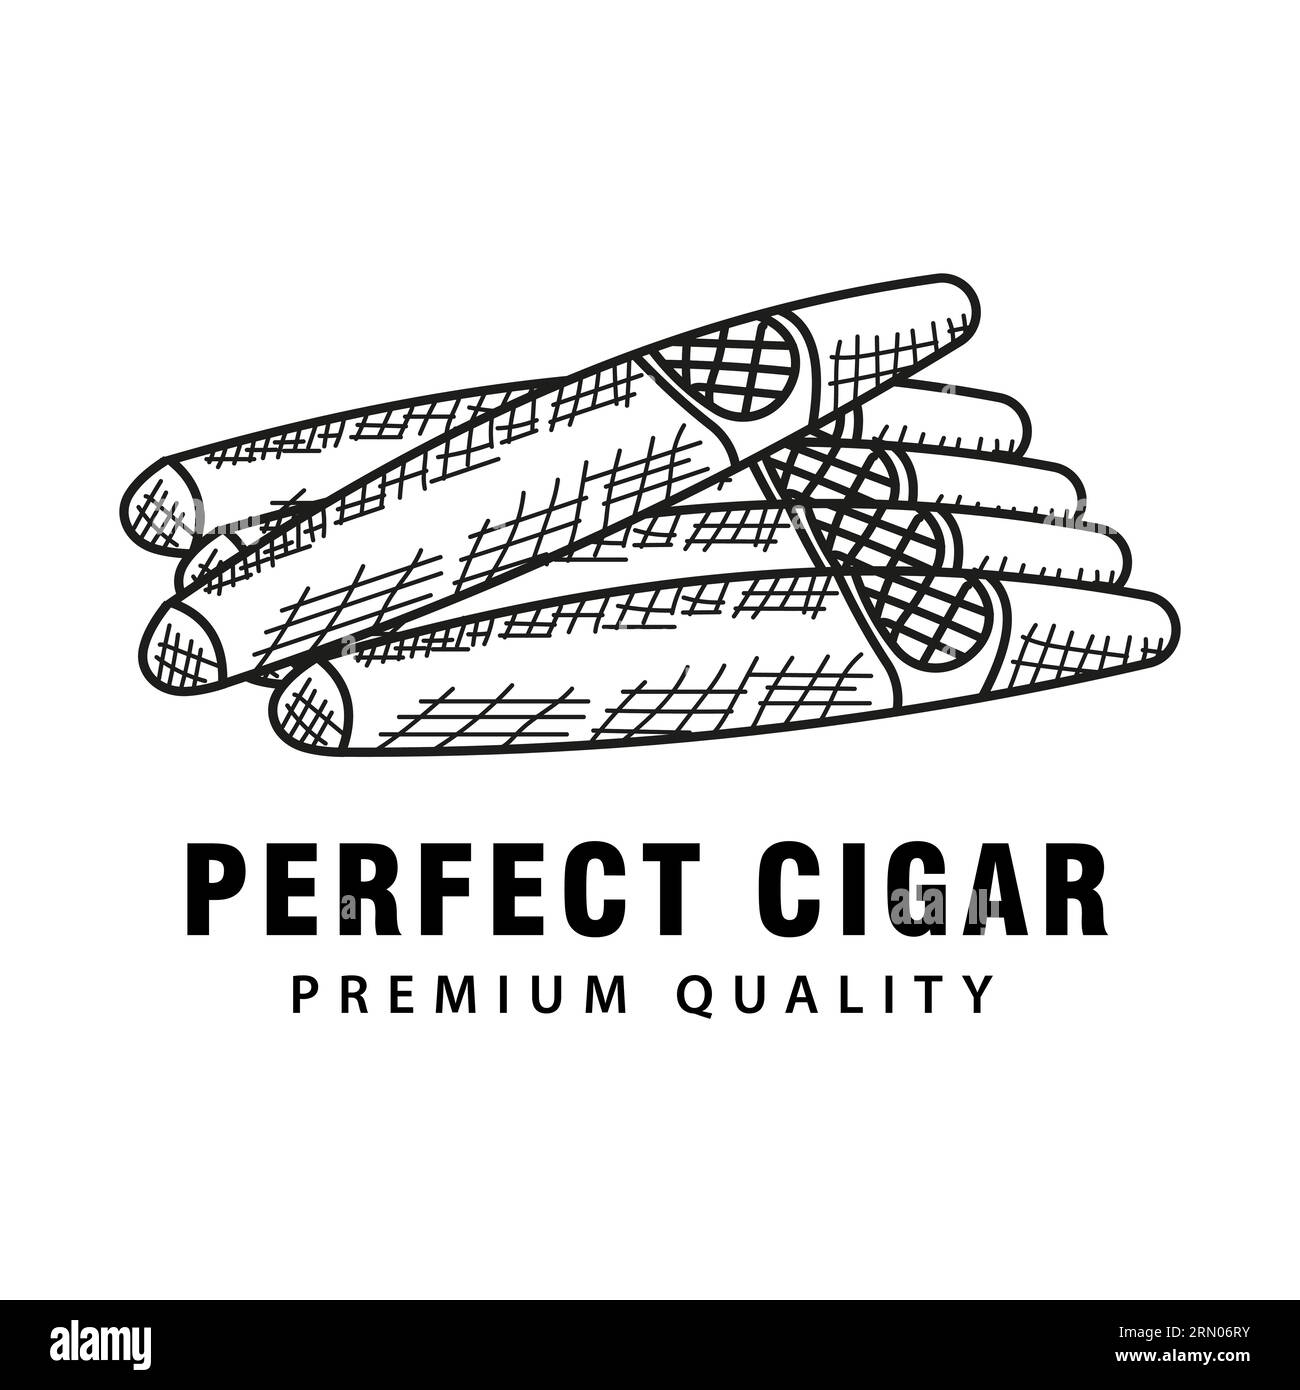 Zigarrenlogo Stock-Vektorgrafiken kaufen - Alamy